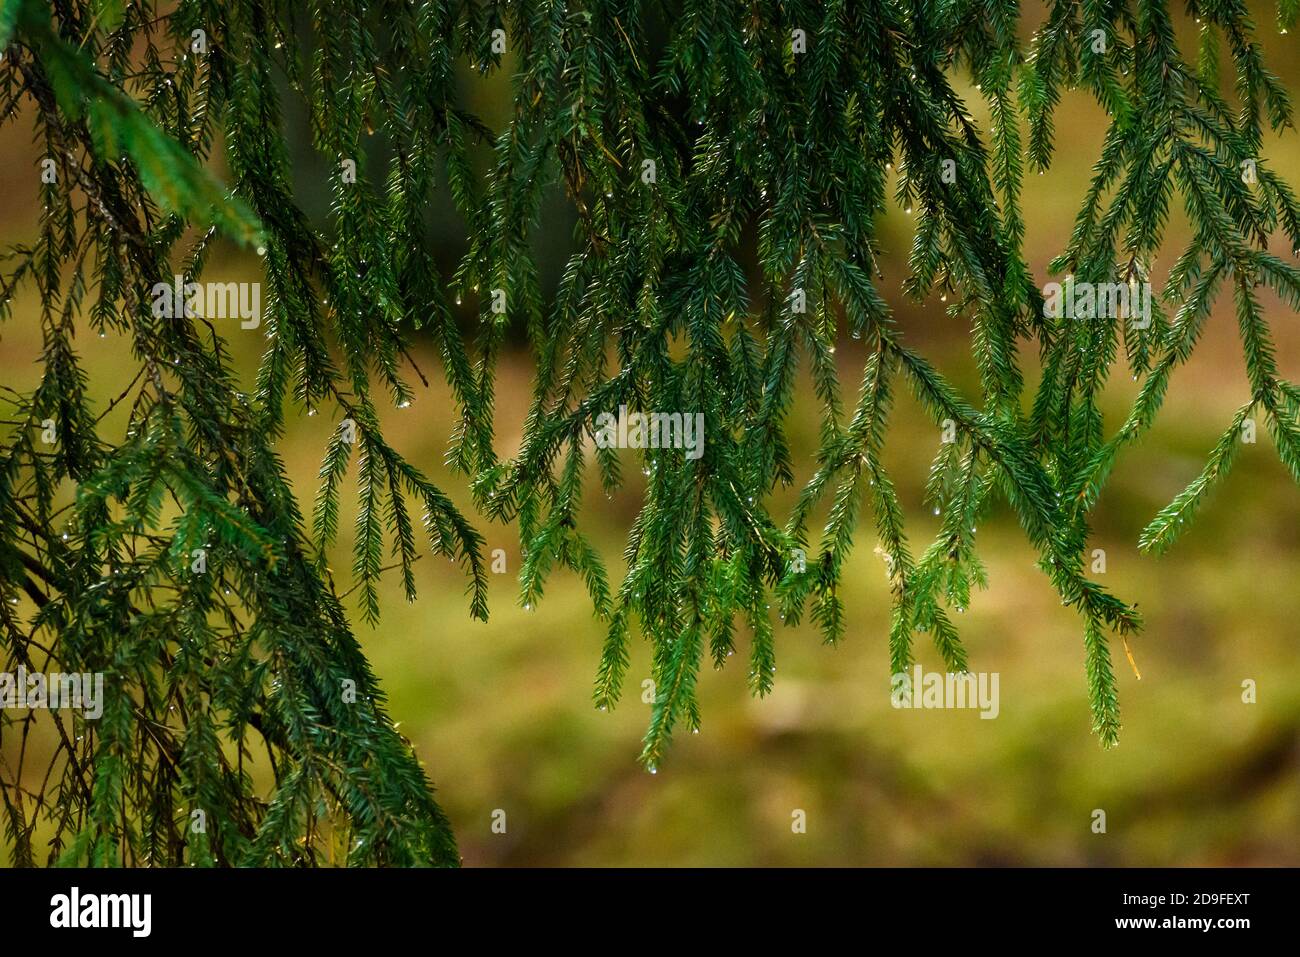 Spruce tree needles with rains drops. Stock Photo